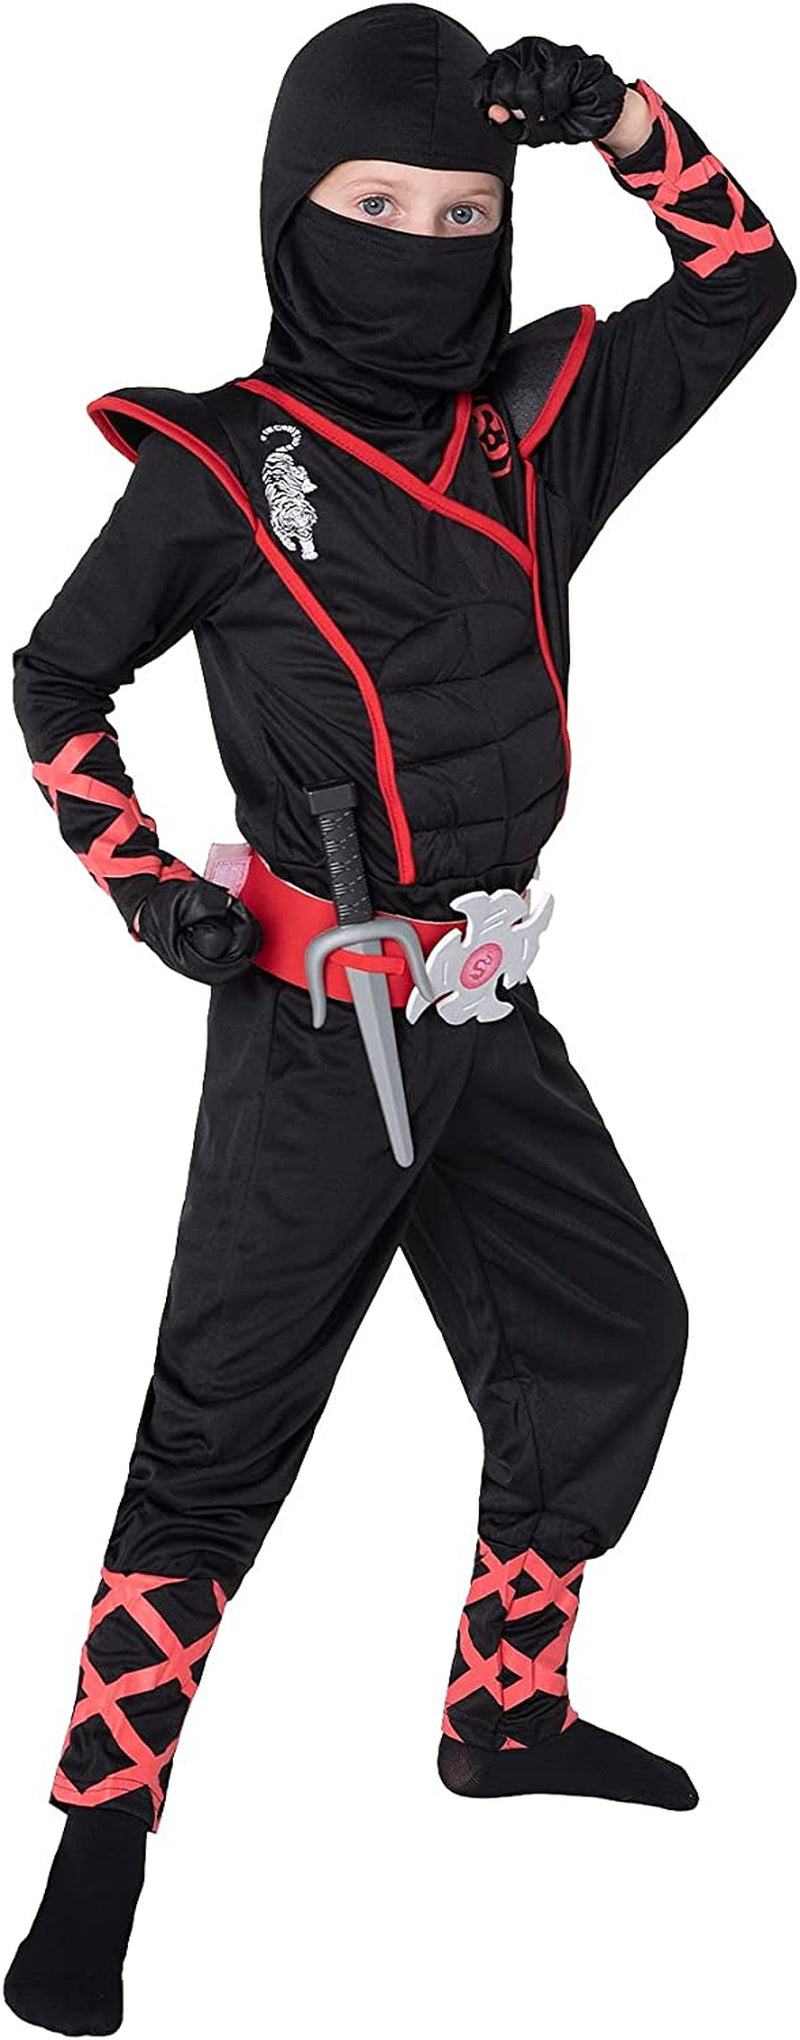 Spooktacular Creations Ninja Costume for Kids, Black Deluxe Ninja Costume for Boys Halloween Ninja Costume Dress up (Black, Small(5-7Yrs))  Joyin Inc   